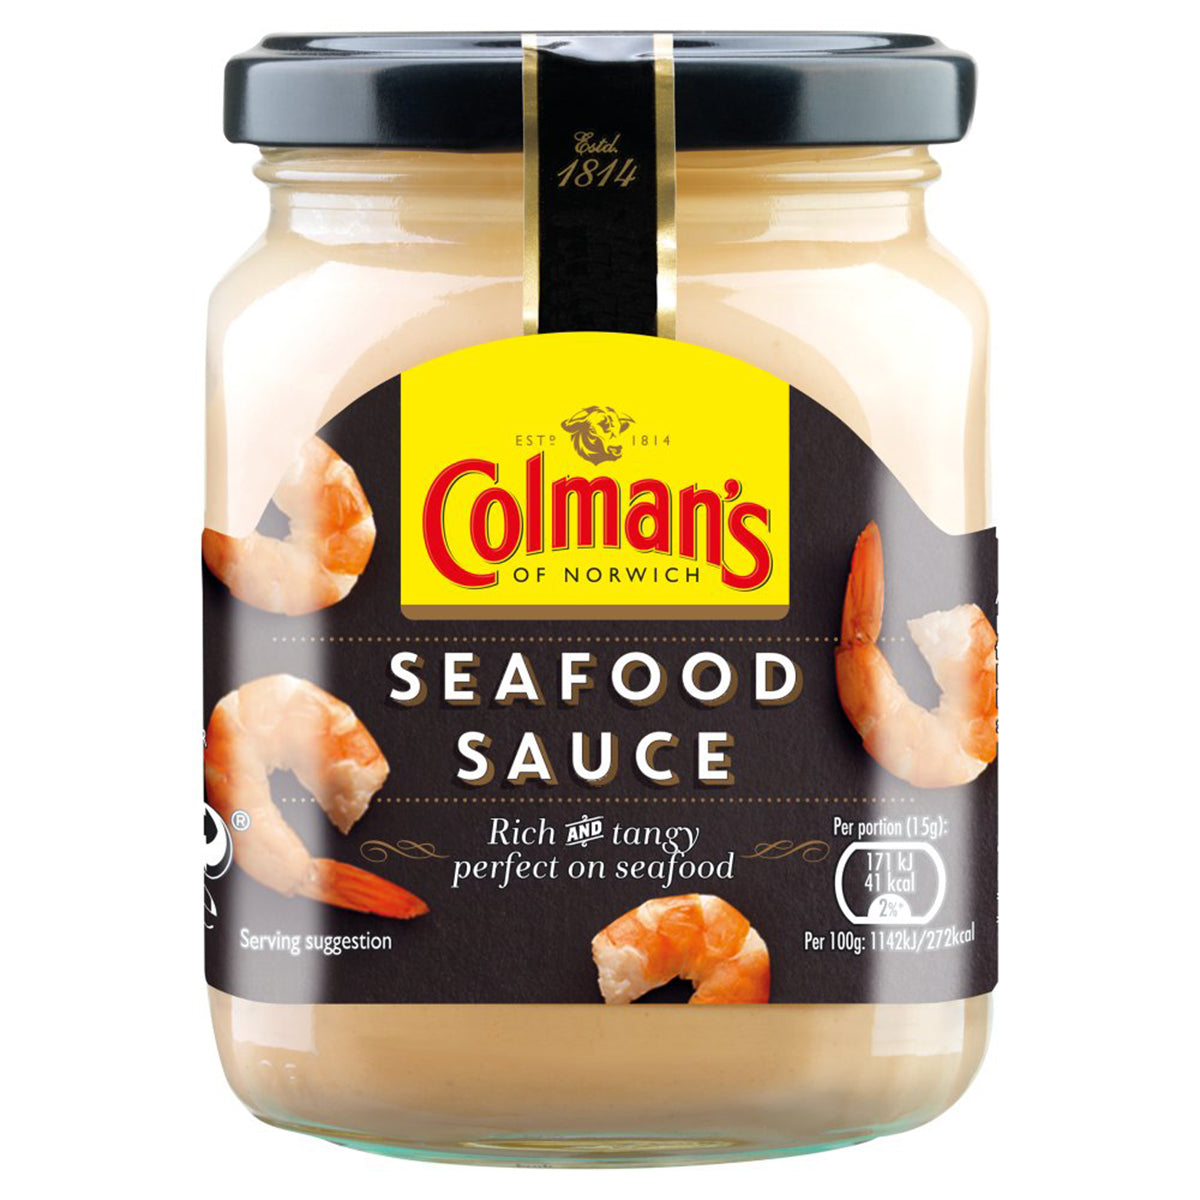 A jar of Colmans Seafood Sauce.